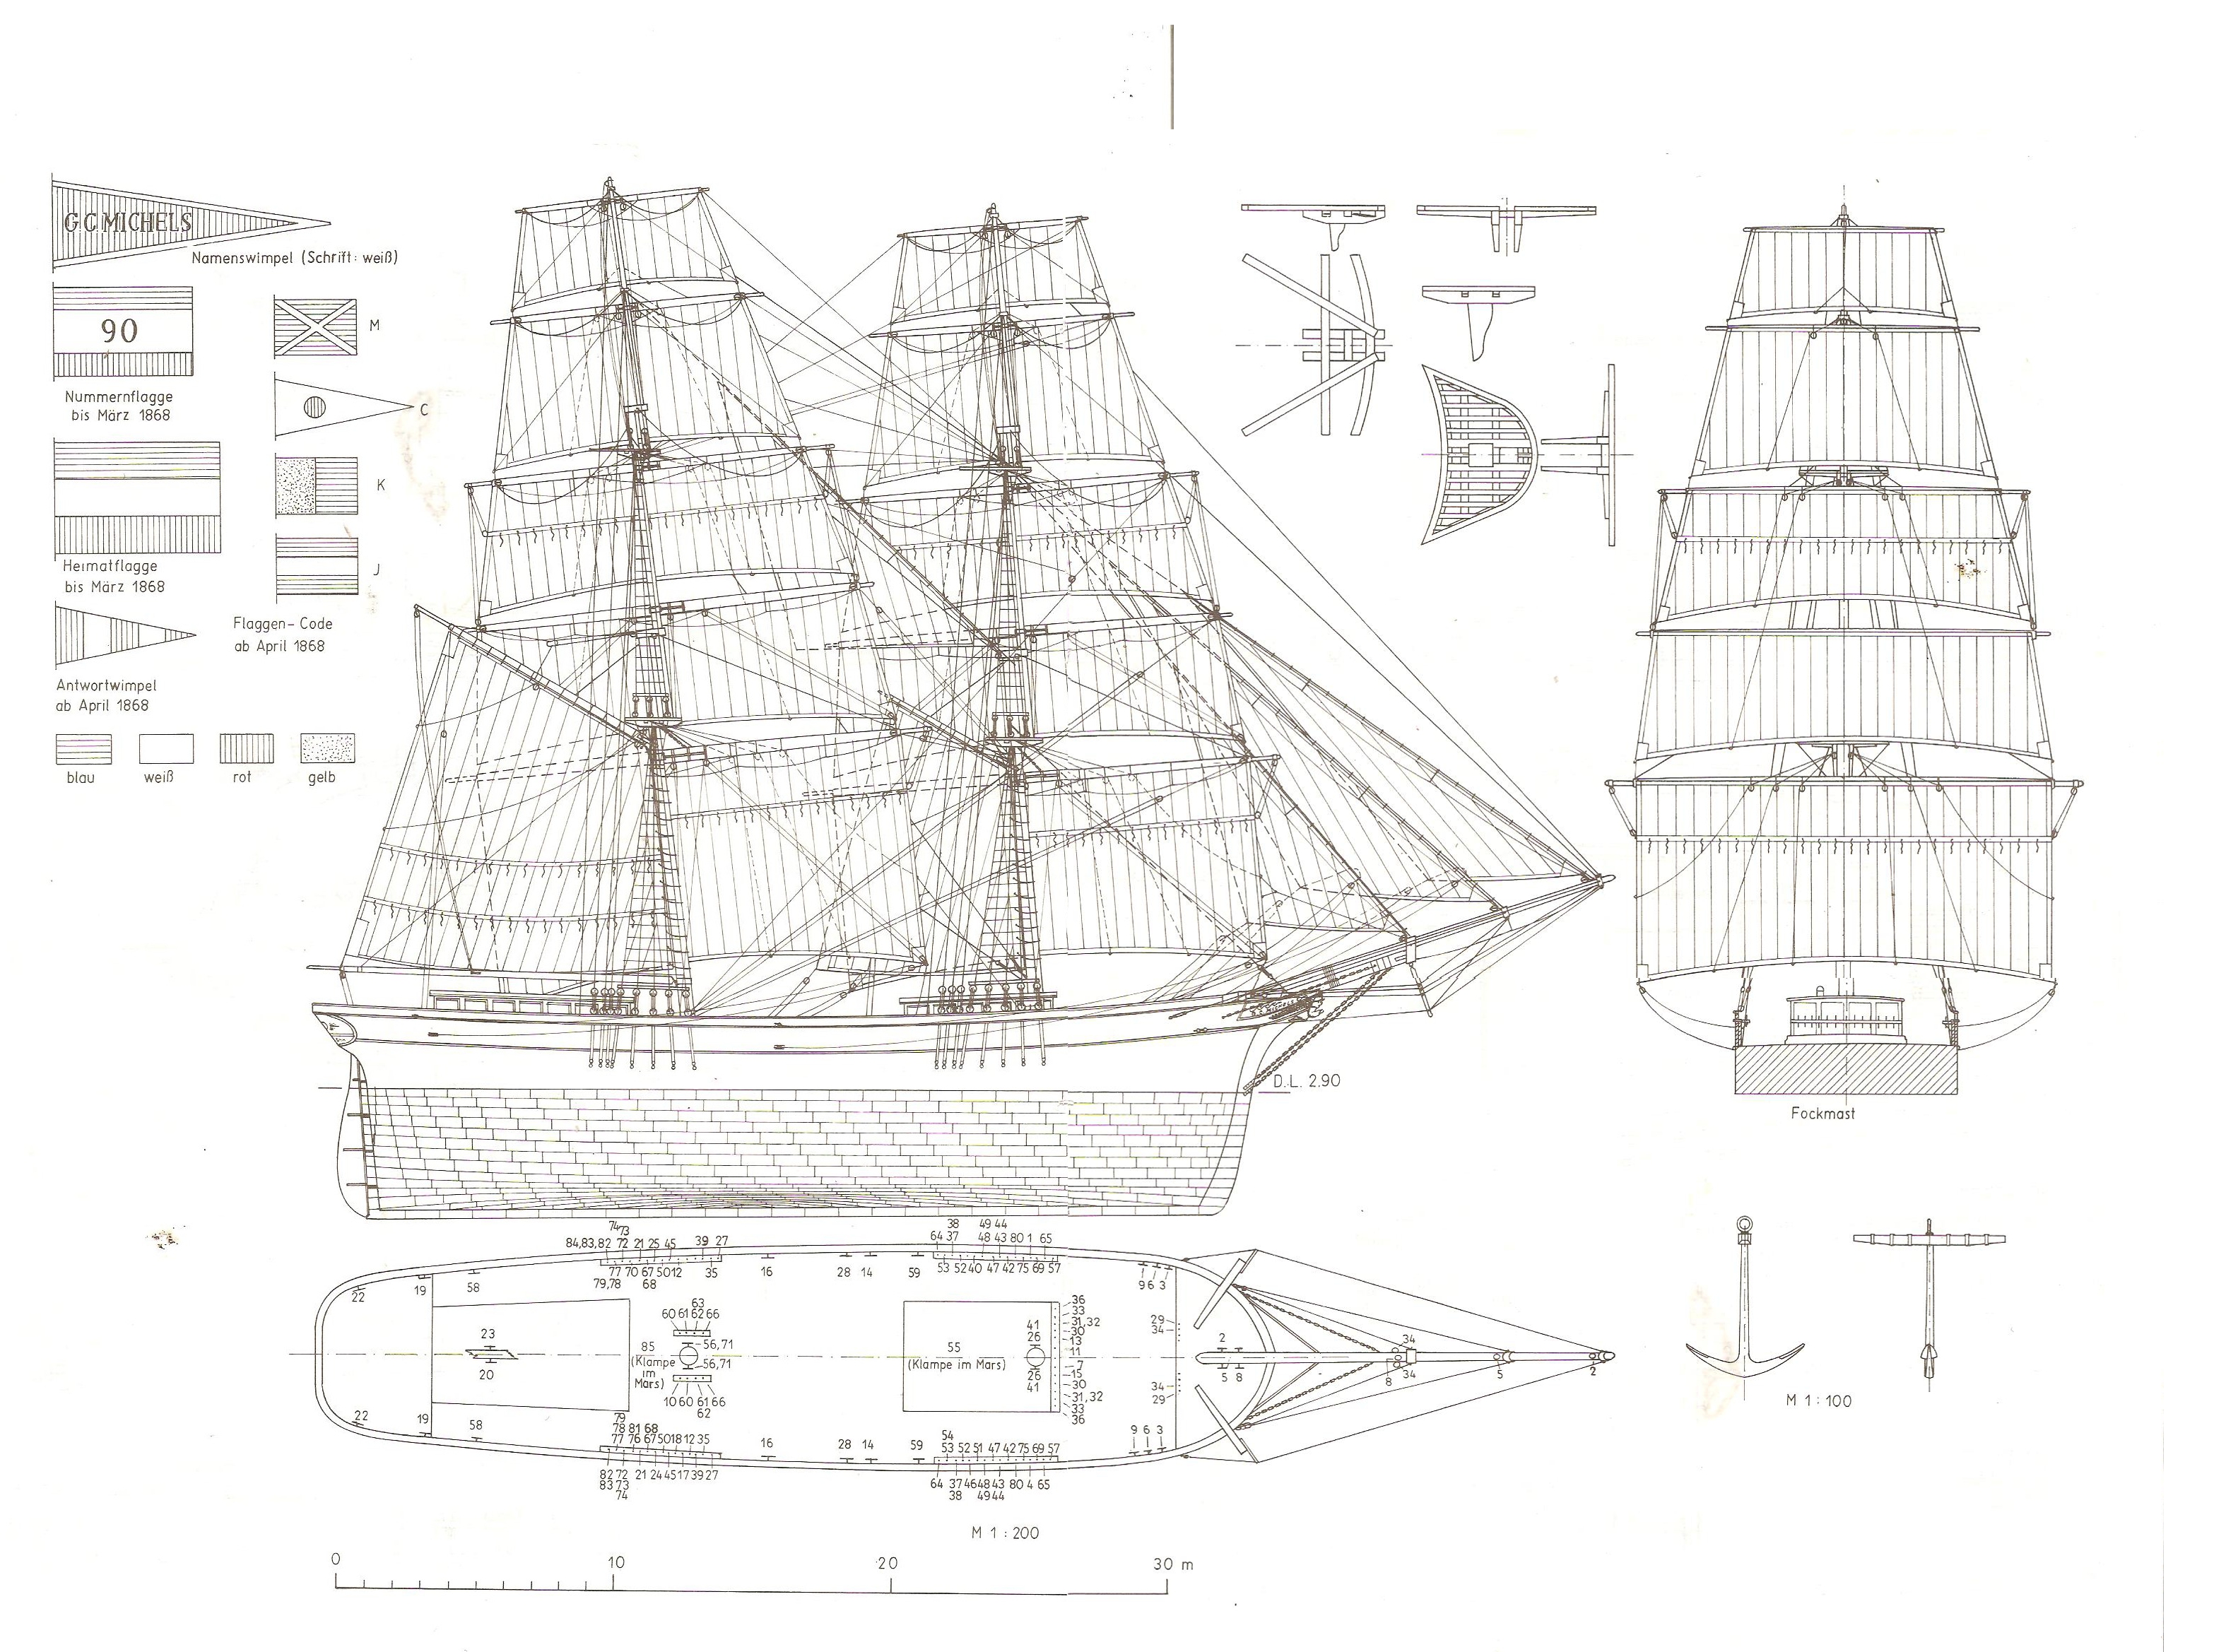 Фрегат чертеж. Парусные корабли 17 века чертежи. Бриг корабль парусный чертежи. Бриг леди Вашингтон чертежи. Чертежи фрегата Эссекс.